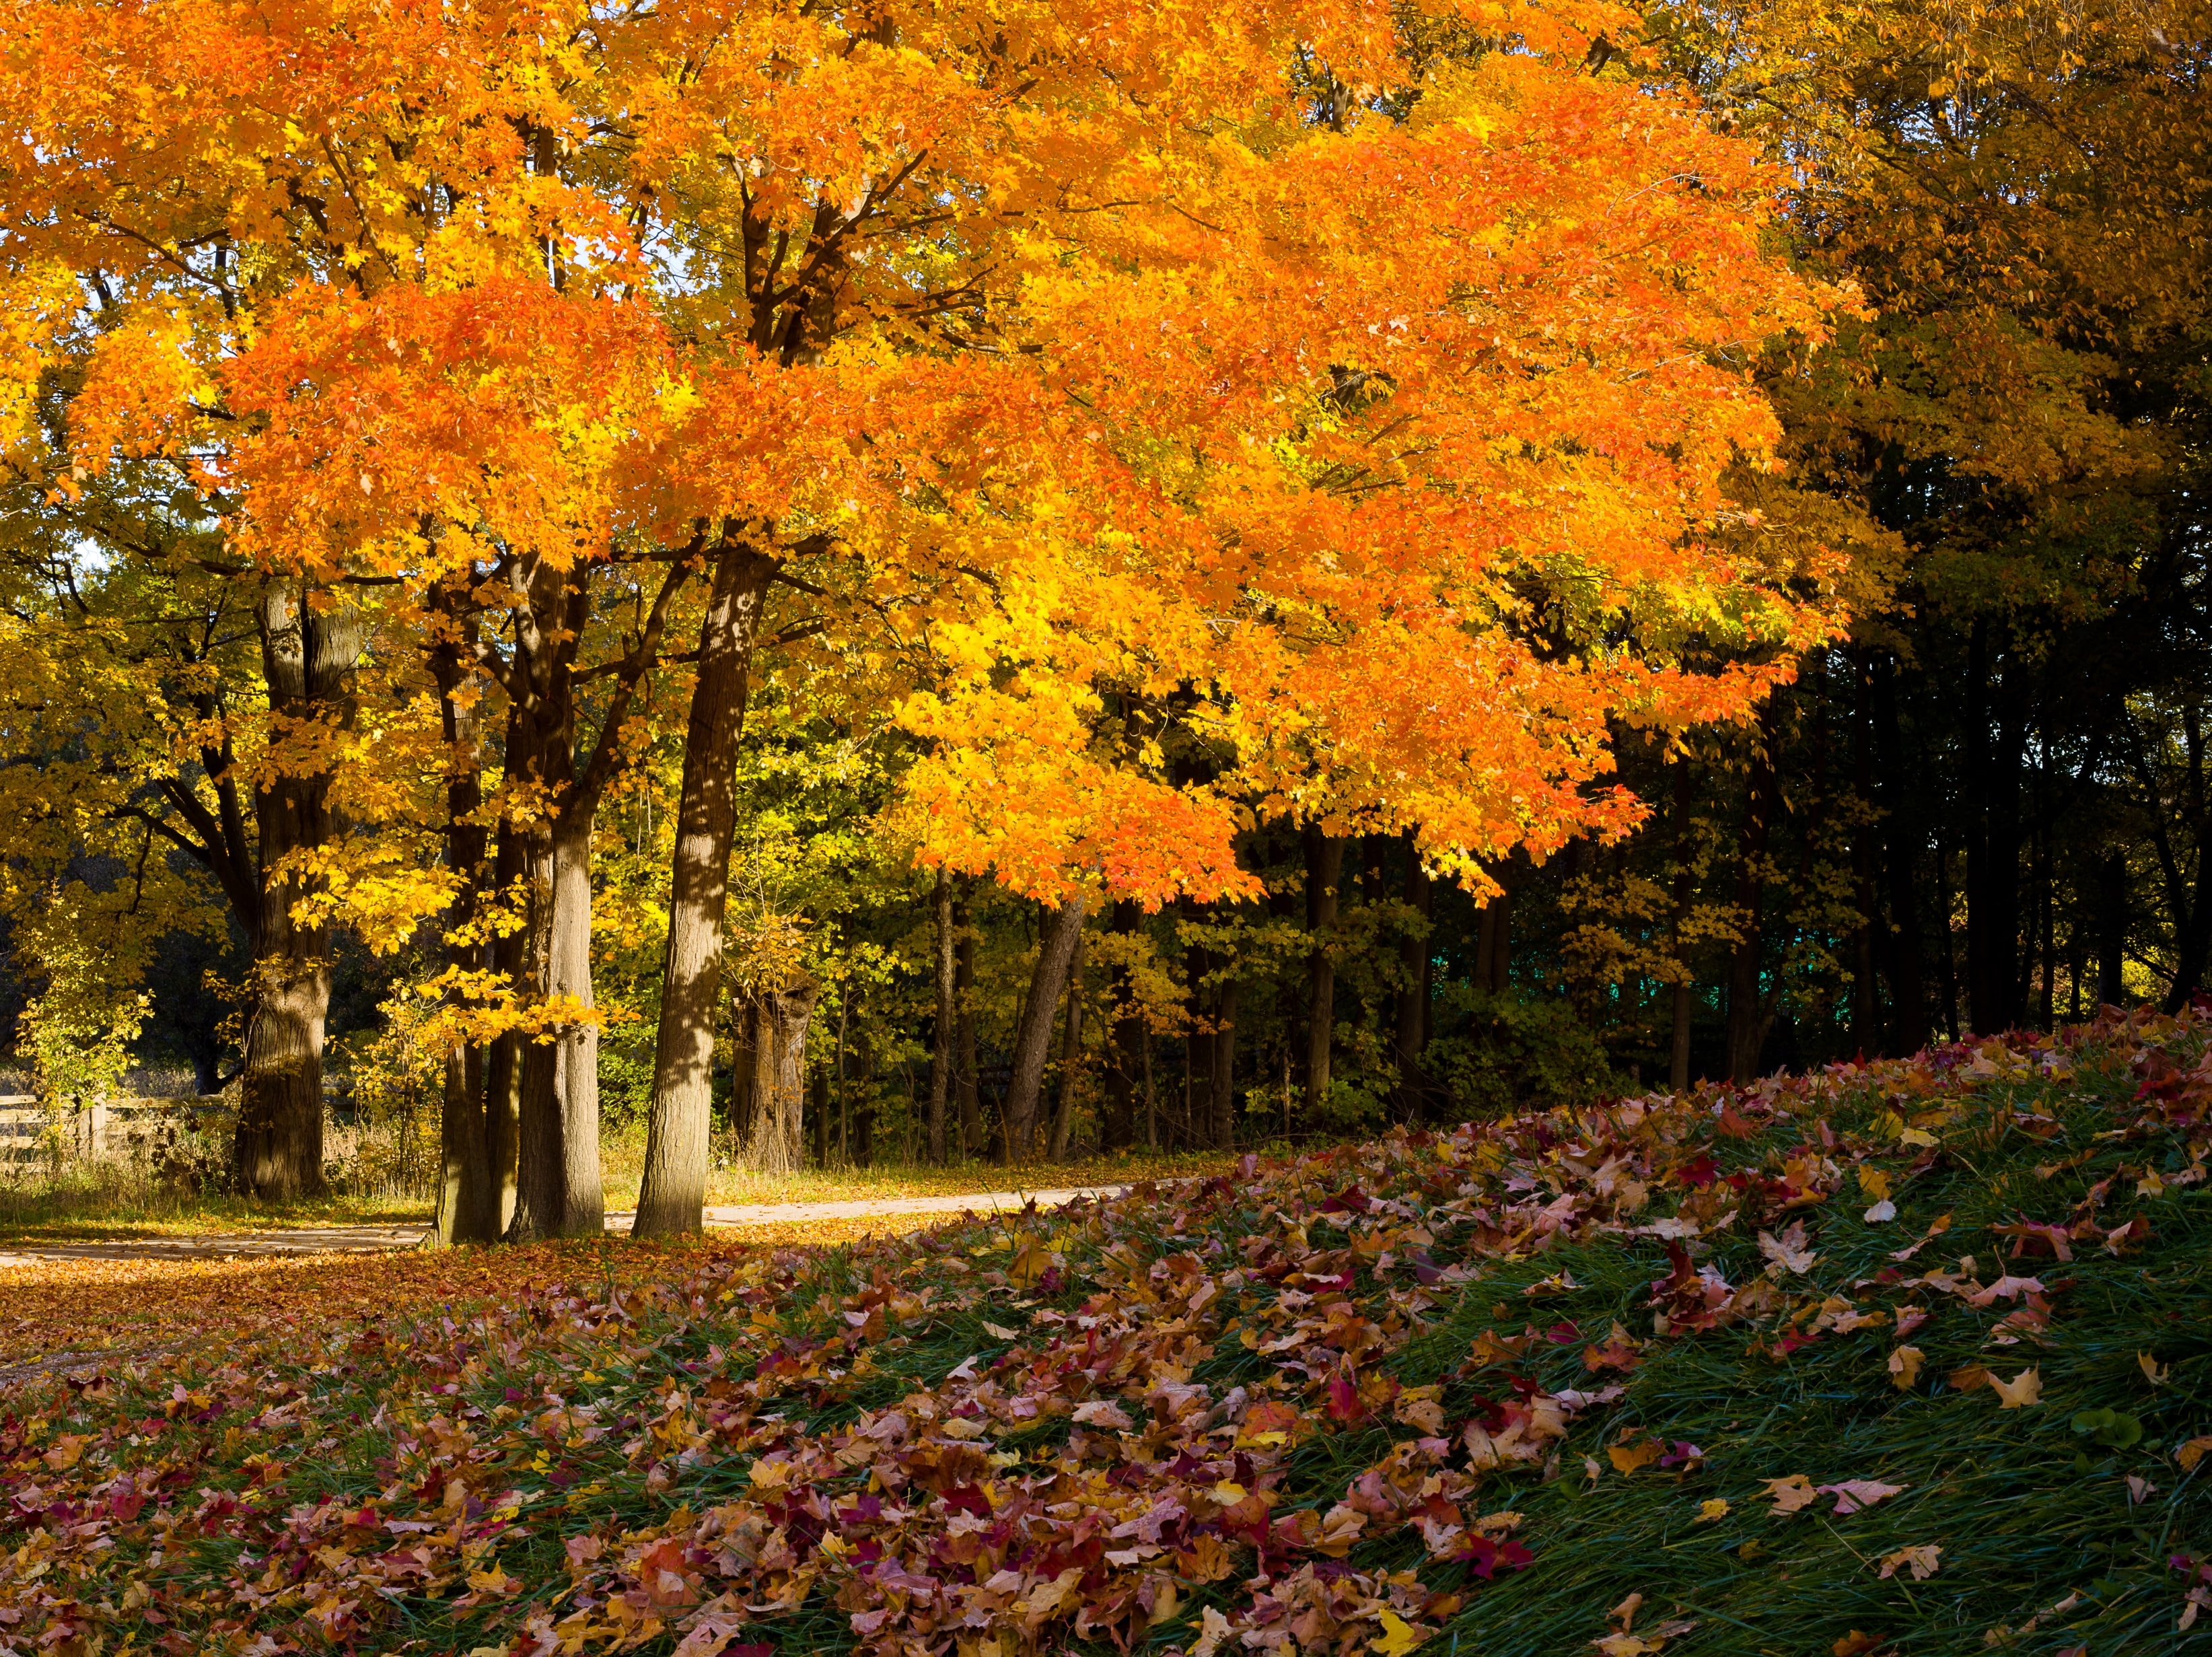 orange leafed tree, trees, foliage, autumn colors, autumn ahead